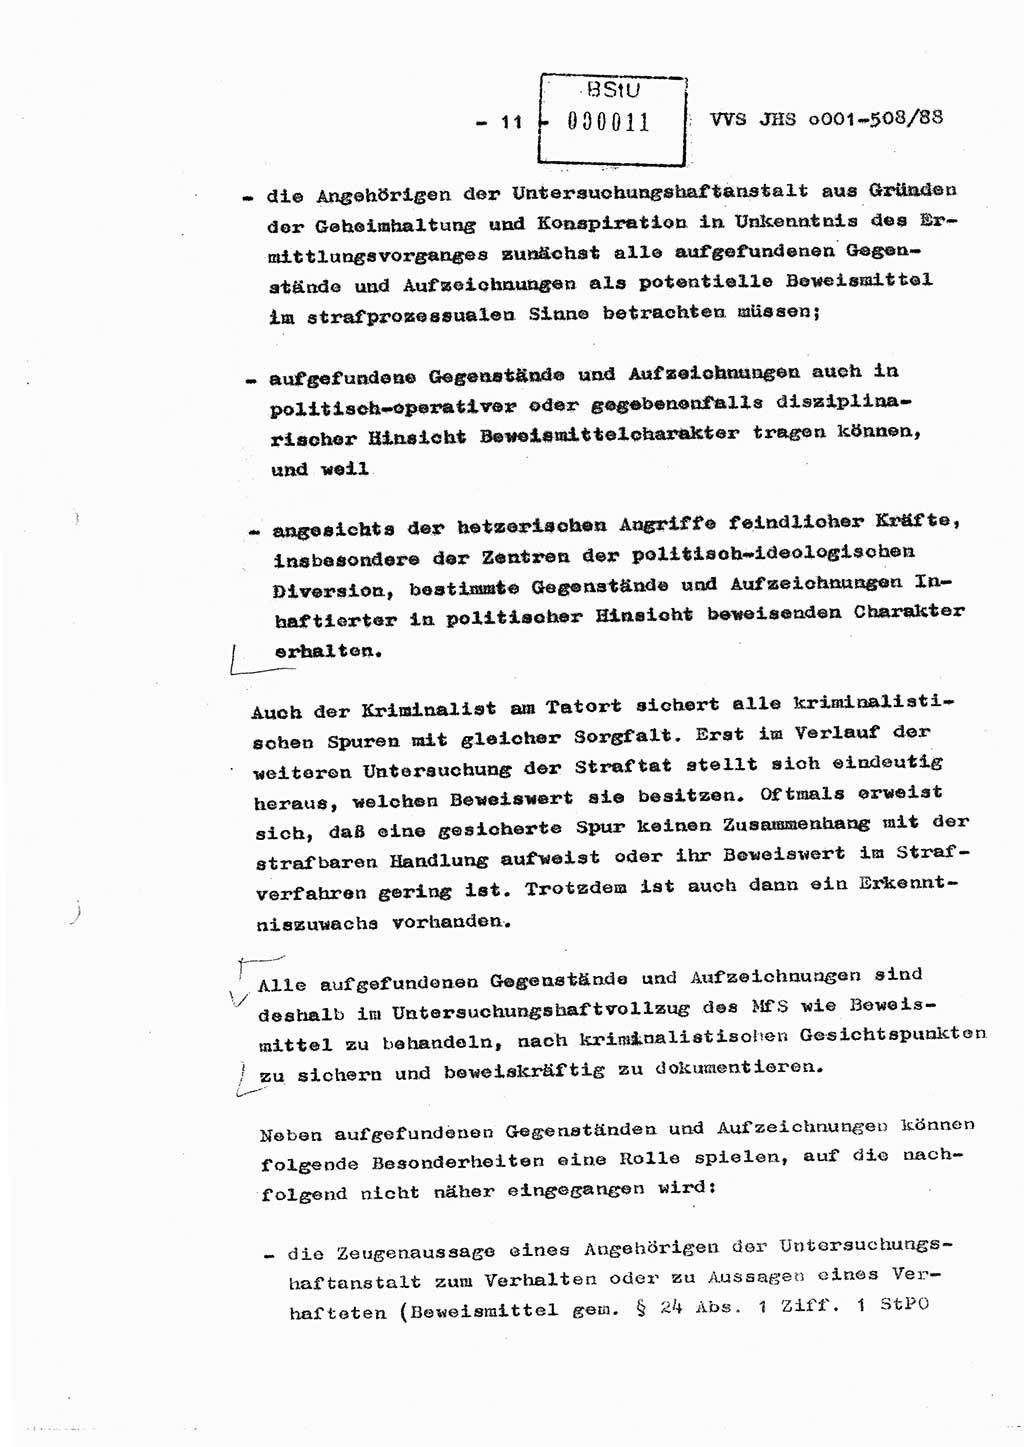 Diplomarbeit Hauptmann Christian Kätzel (Abt. ⅩⅣ), Ministerium für Staatssicherheit (MfS) [Deutsche Demokratische Republik (DDR)], Juristische Hochschule (JHS), Vertrauliche Verschlußsache (VVS) o001-508/88, Potsdam 1988, Blatt 11 (Dipl.-Arb. MfS DDR JHS VVS o001-508/88 1988, Bl. 11)